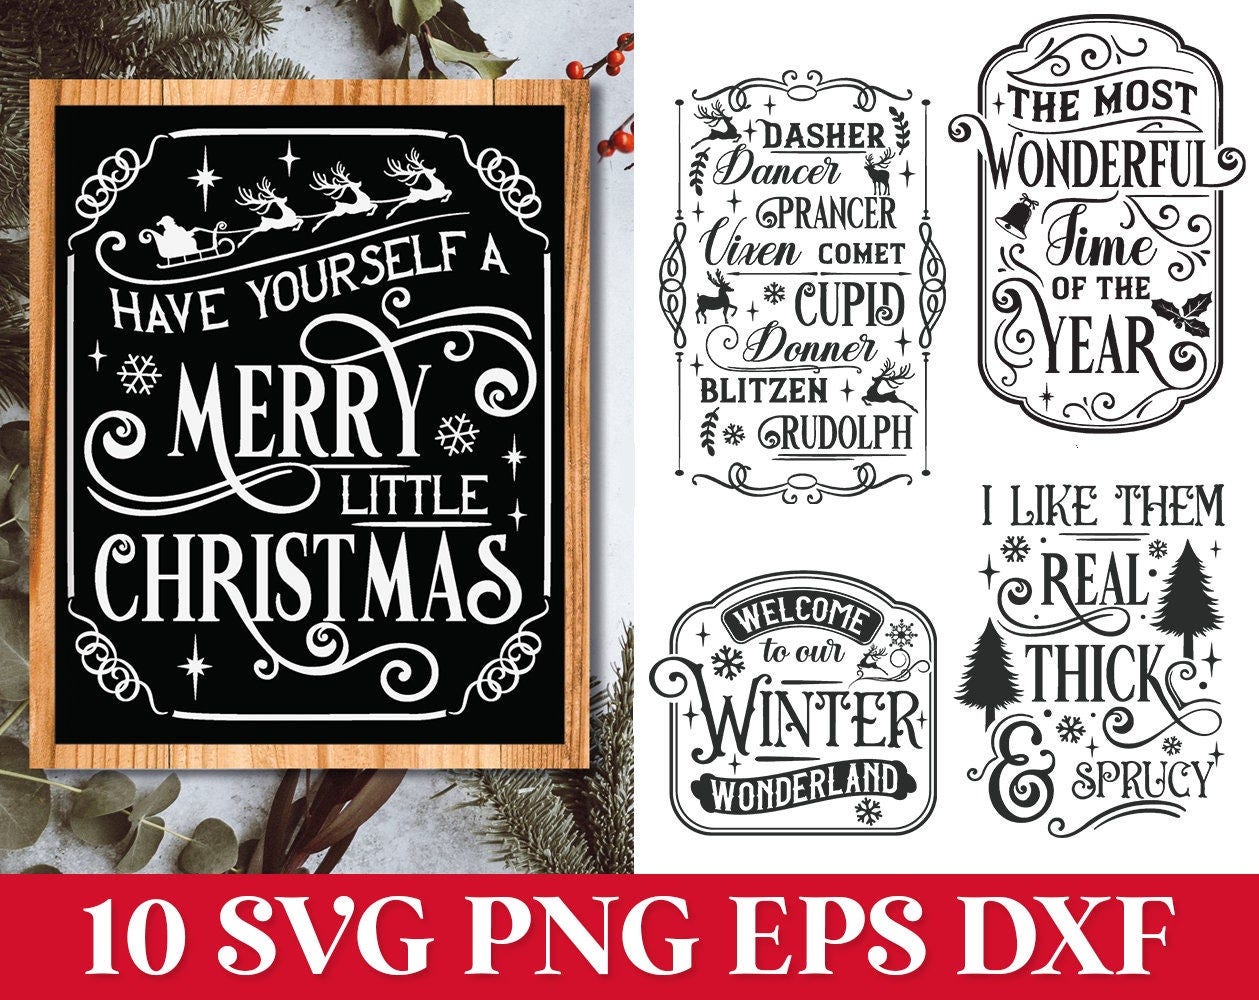 Farmhouse Christmas SVG Sign, Rustic Vintage Christmas SVG Bundle, Christmas Shirt SVG Png, Christmas Trees Svg, Merry Little Christmas Svg